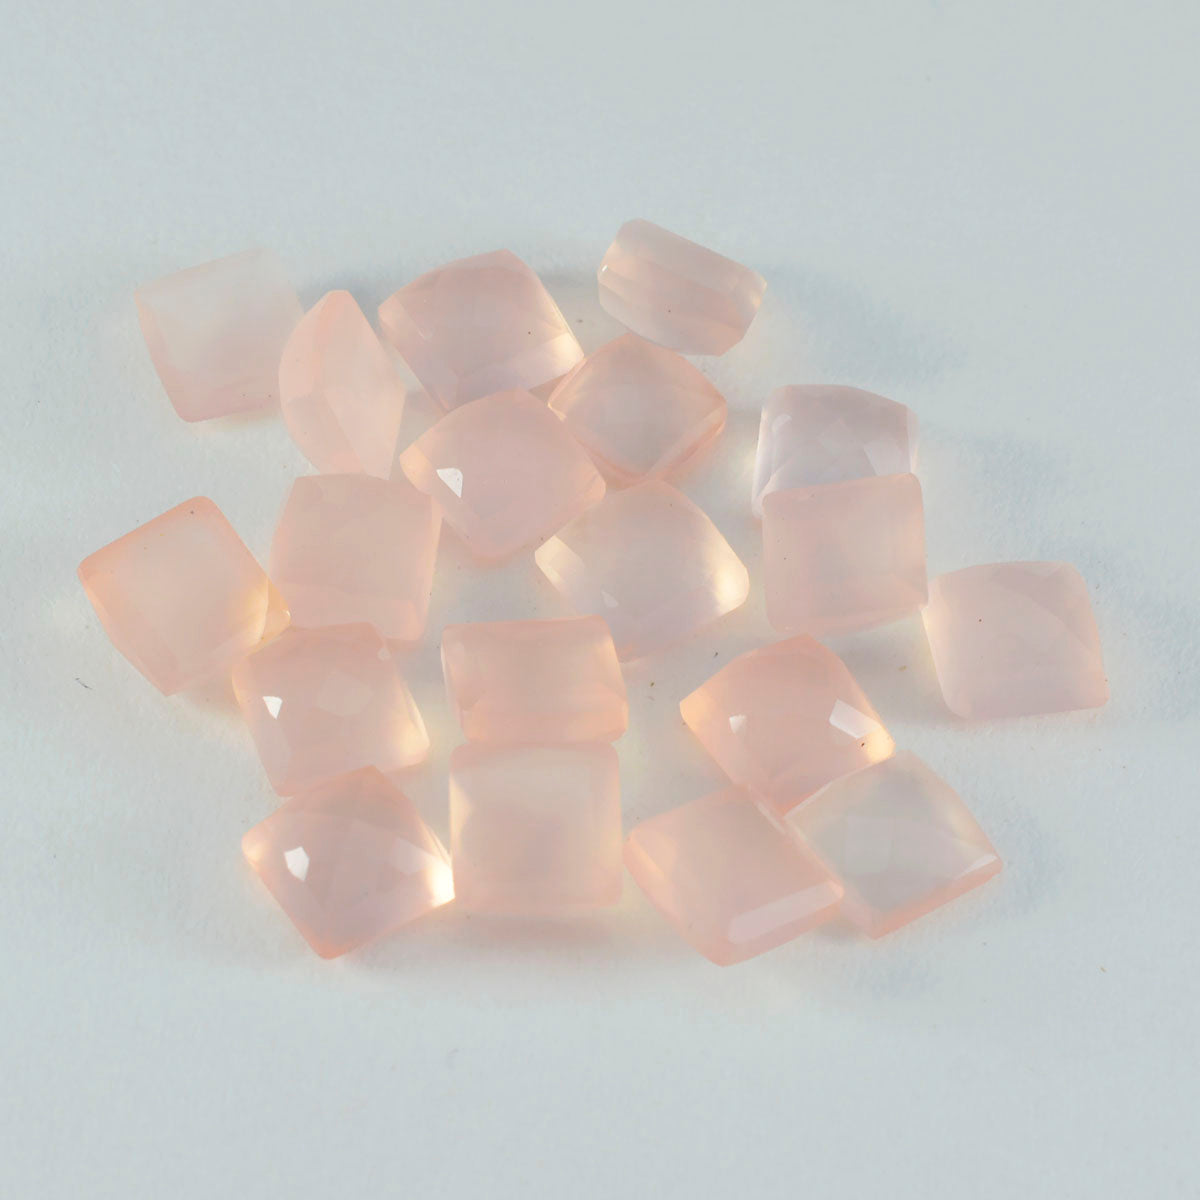 Riyogems 1PC Pink Rose Quartz Faceted 7x7 mm Square Shape handsome Quality Gems